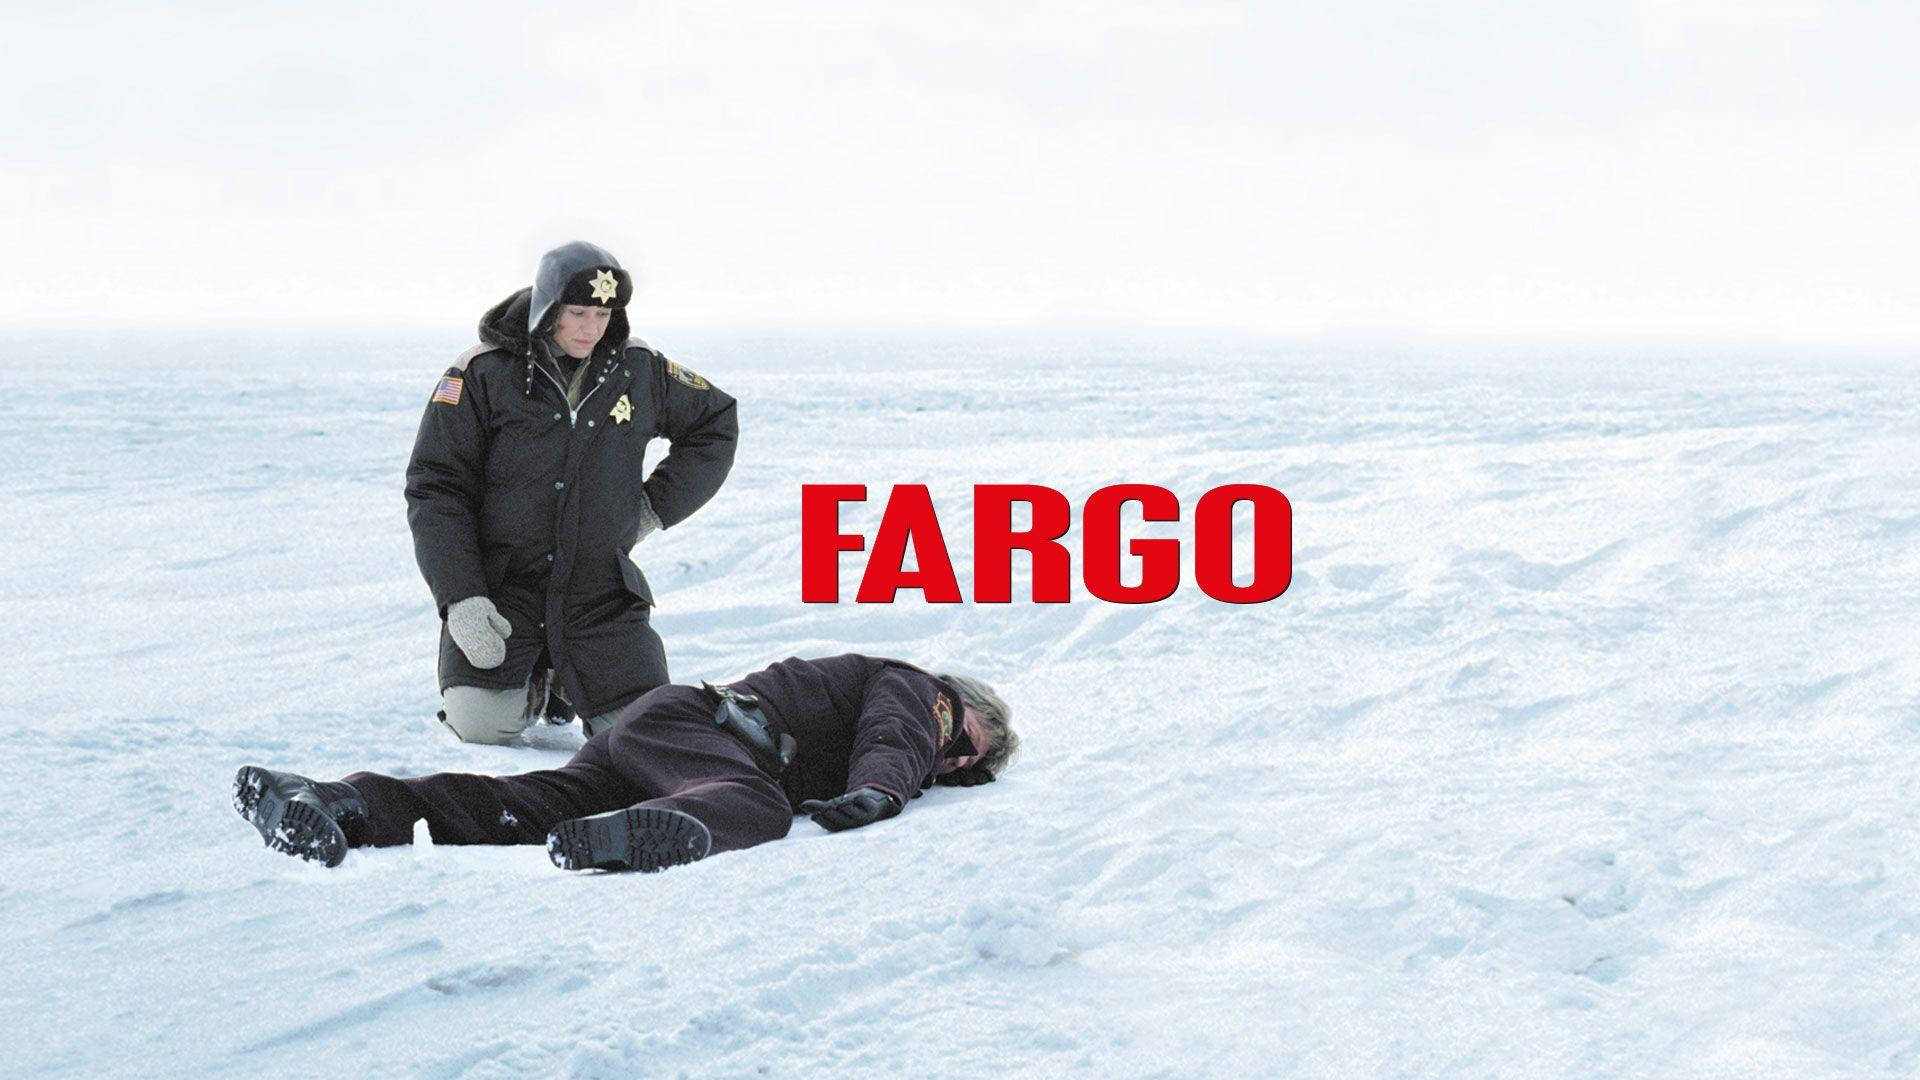 Fargo Snow And Human Body Wallpaper